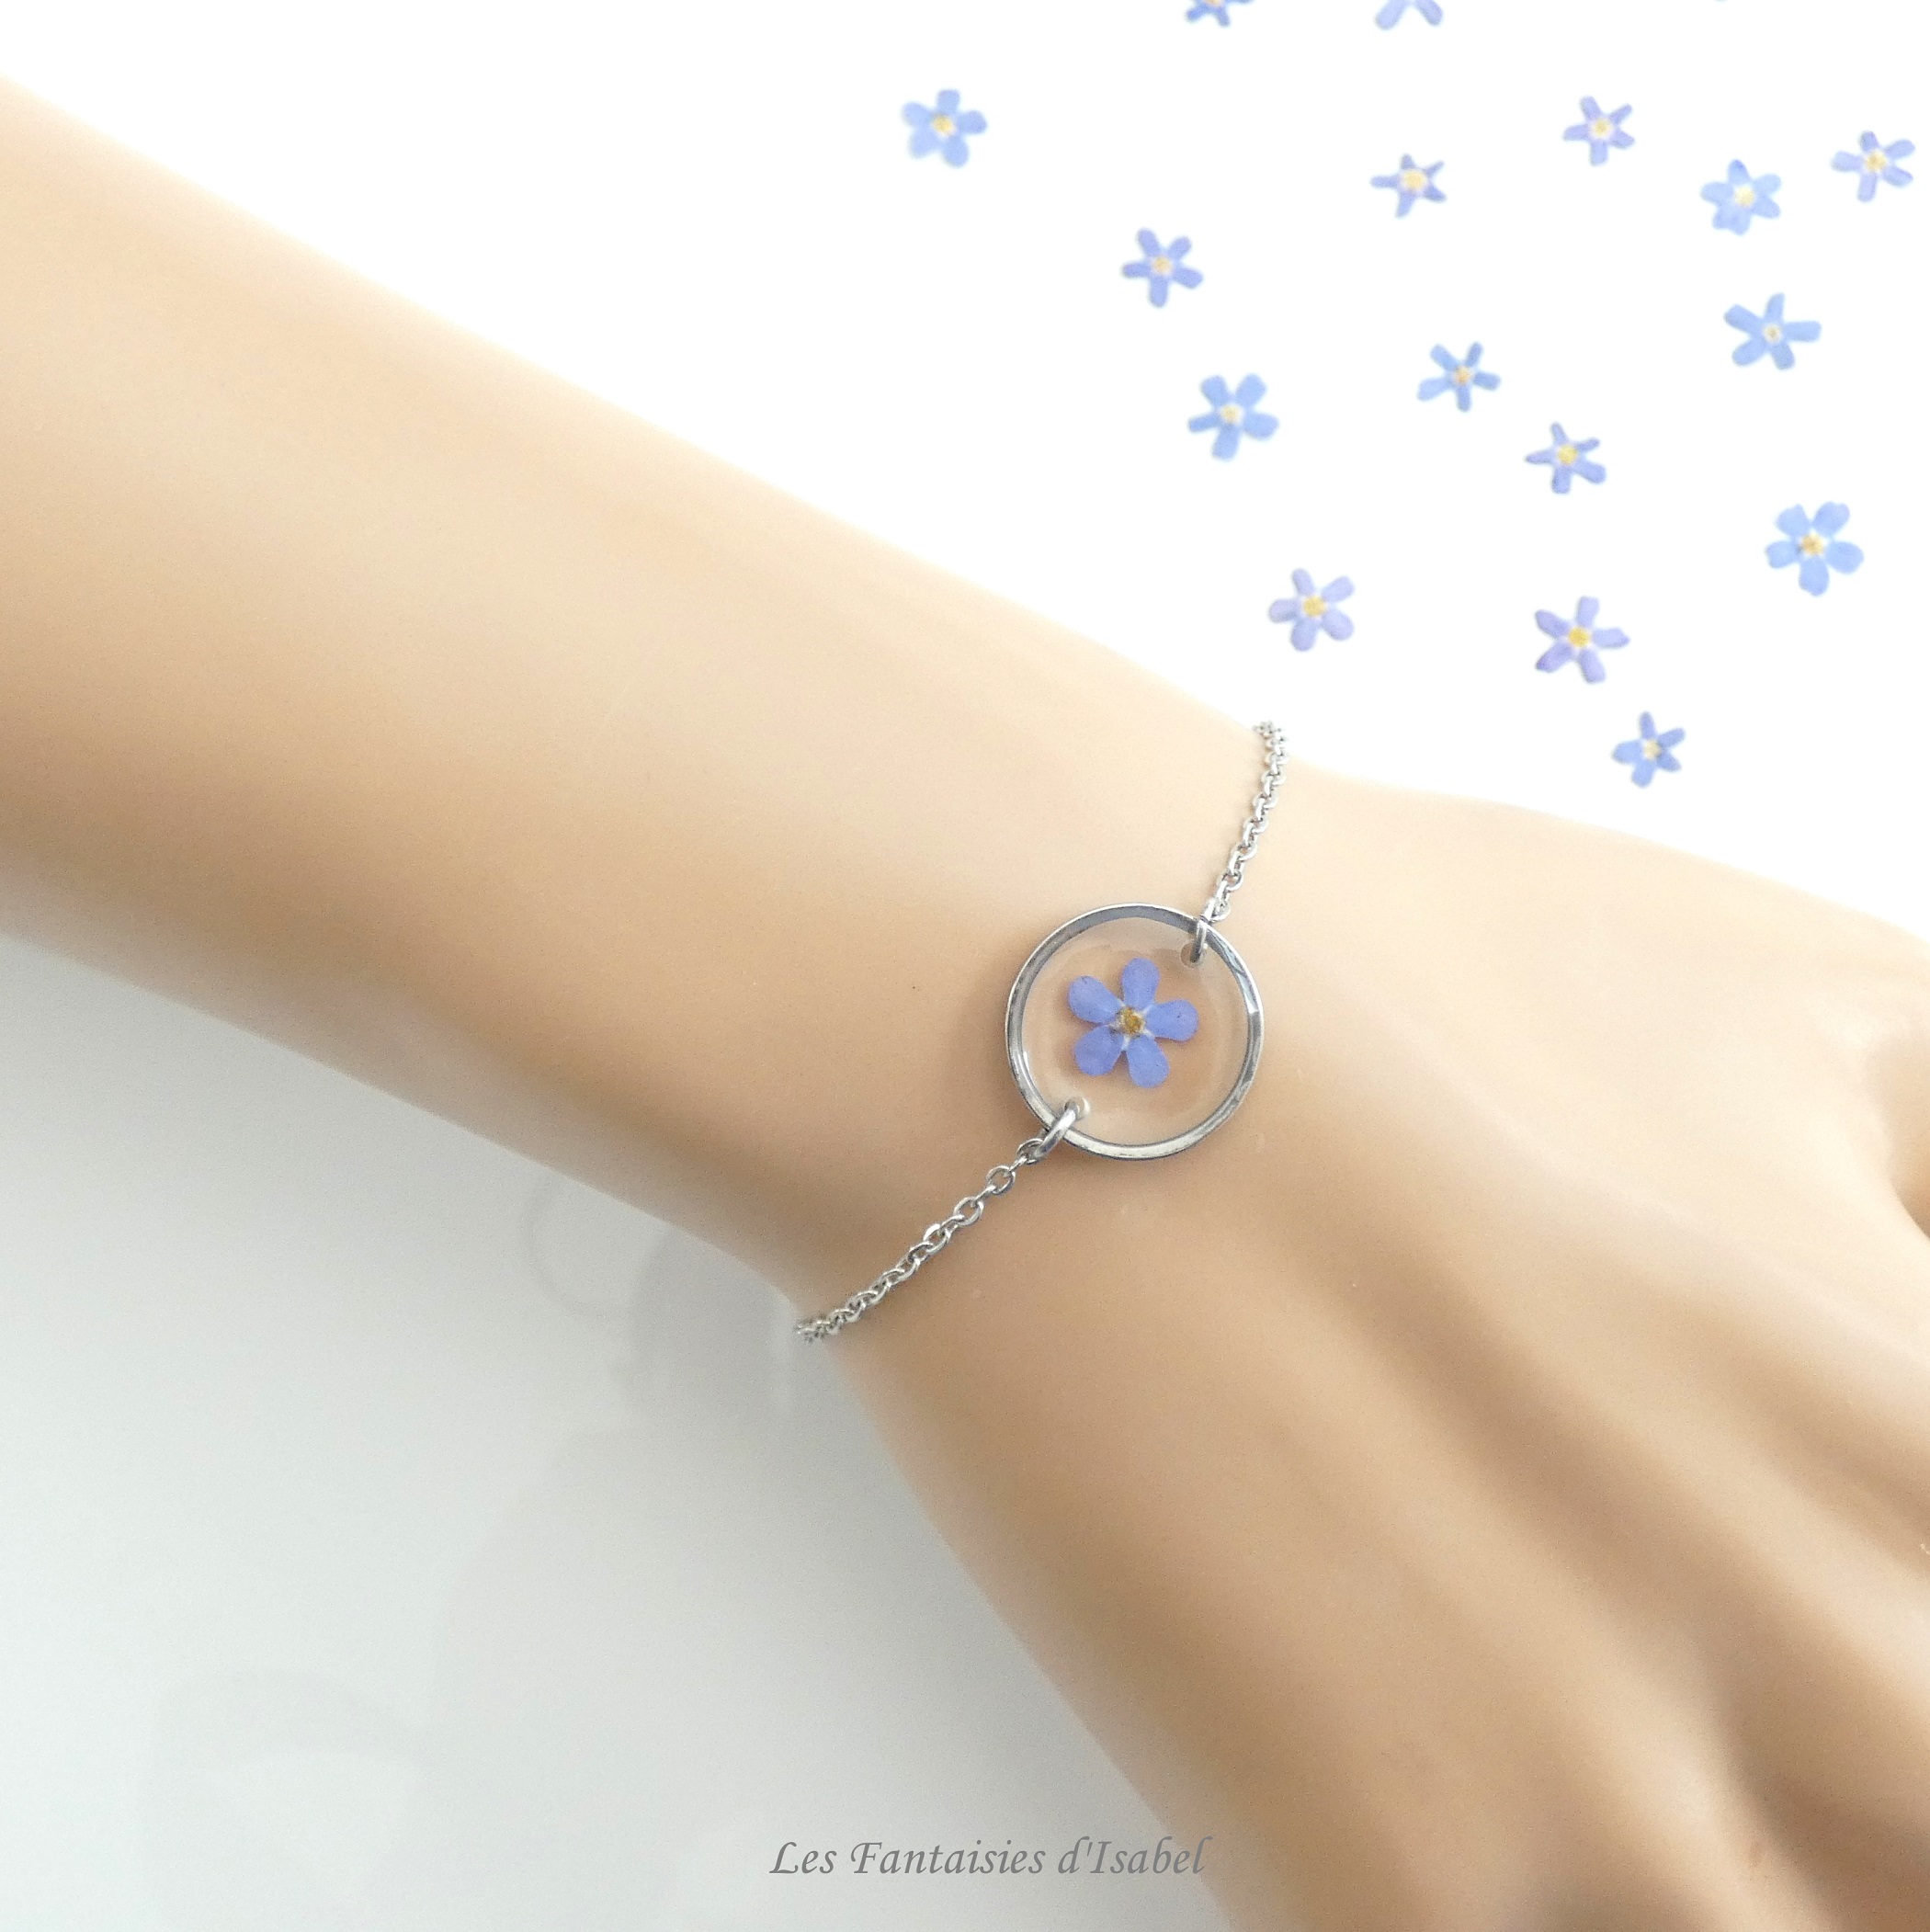 59-bracelet rond acier inox fleur myosotis bleu artisanal landes porté